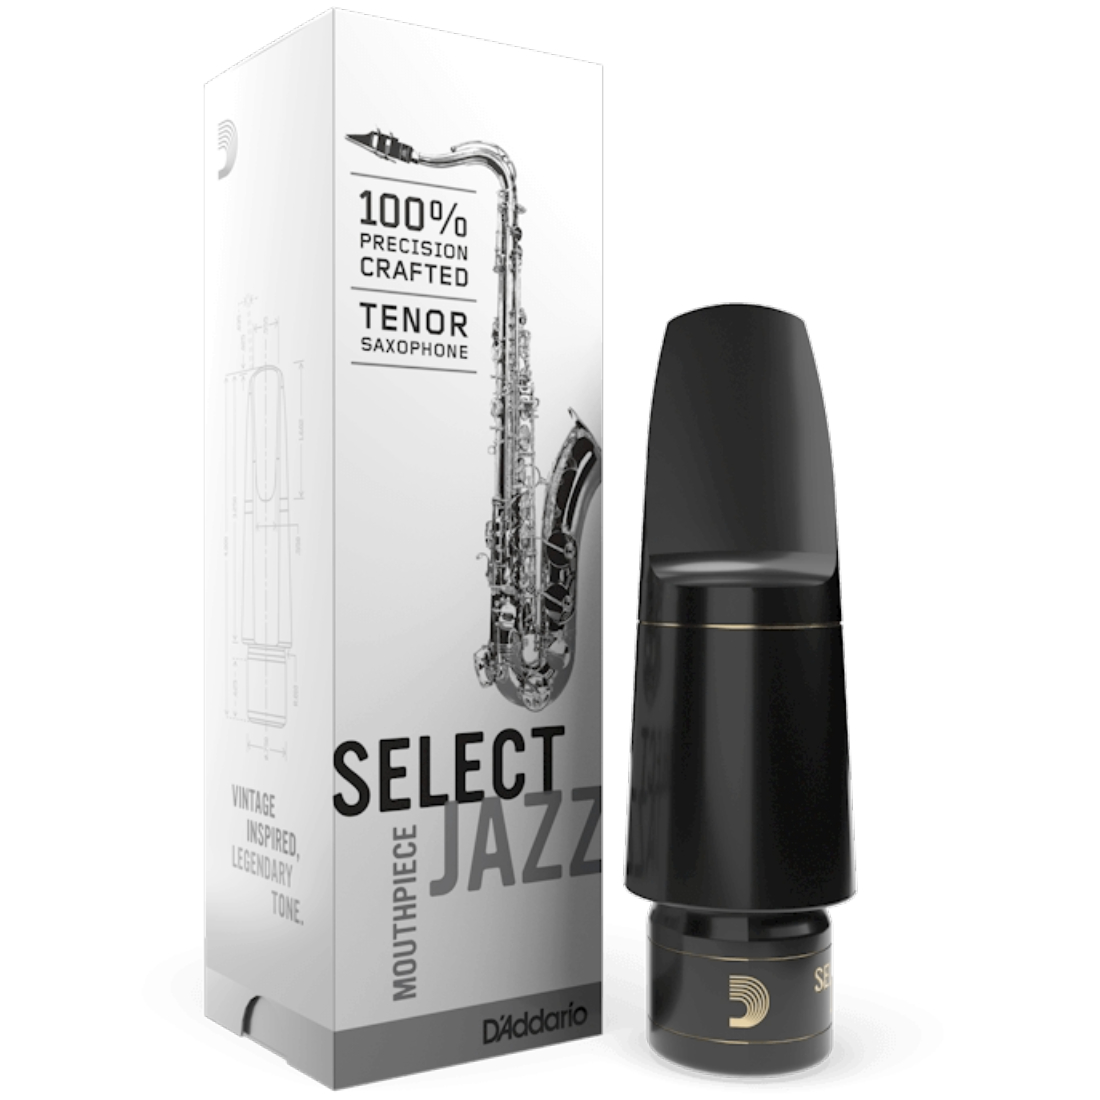 White box D'Addario select jazz tenor saxophone mouthpiece